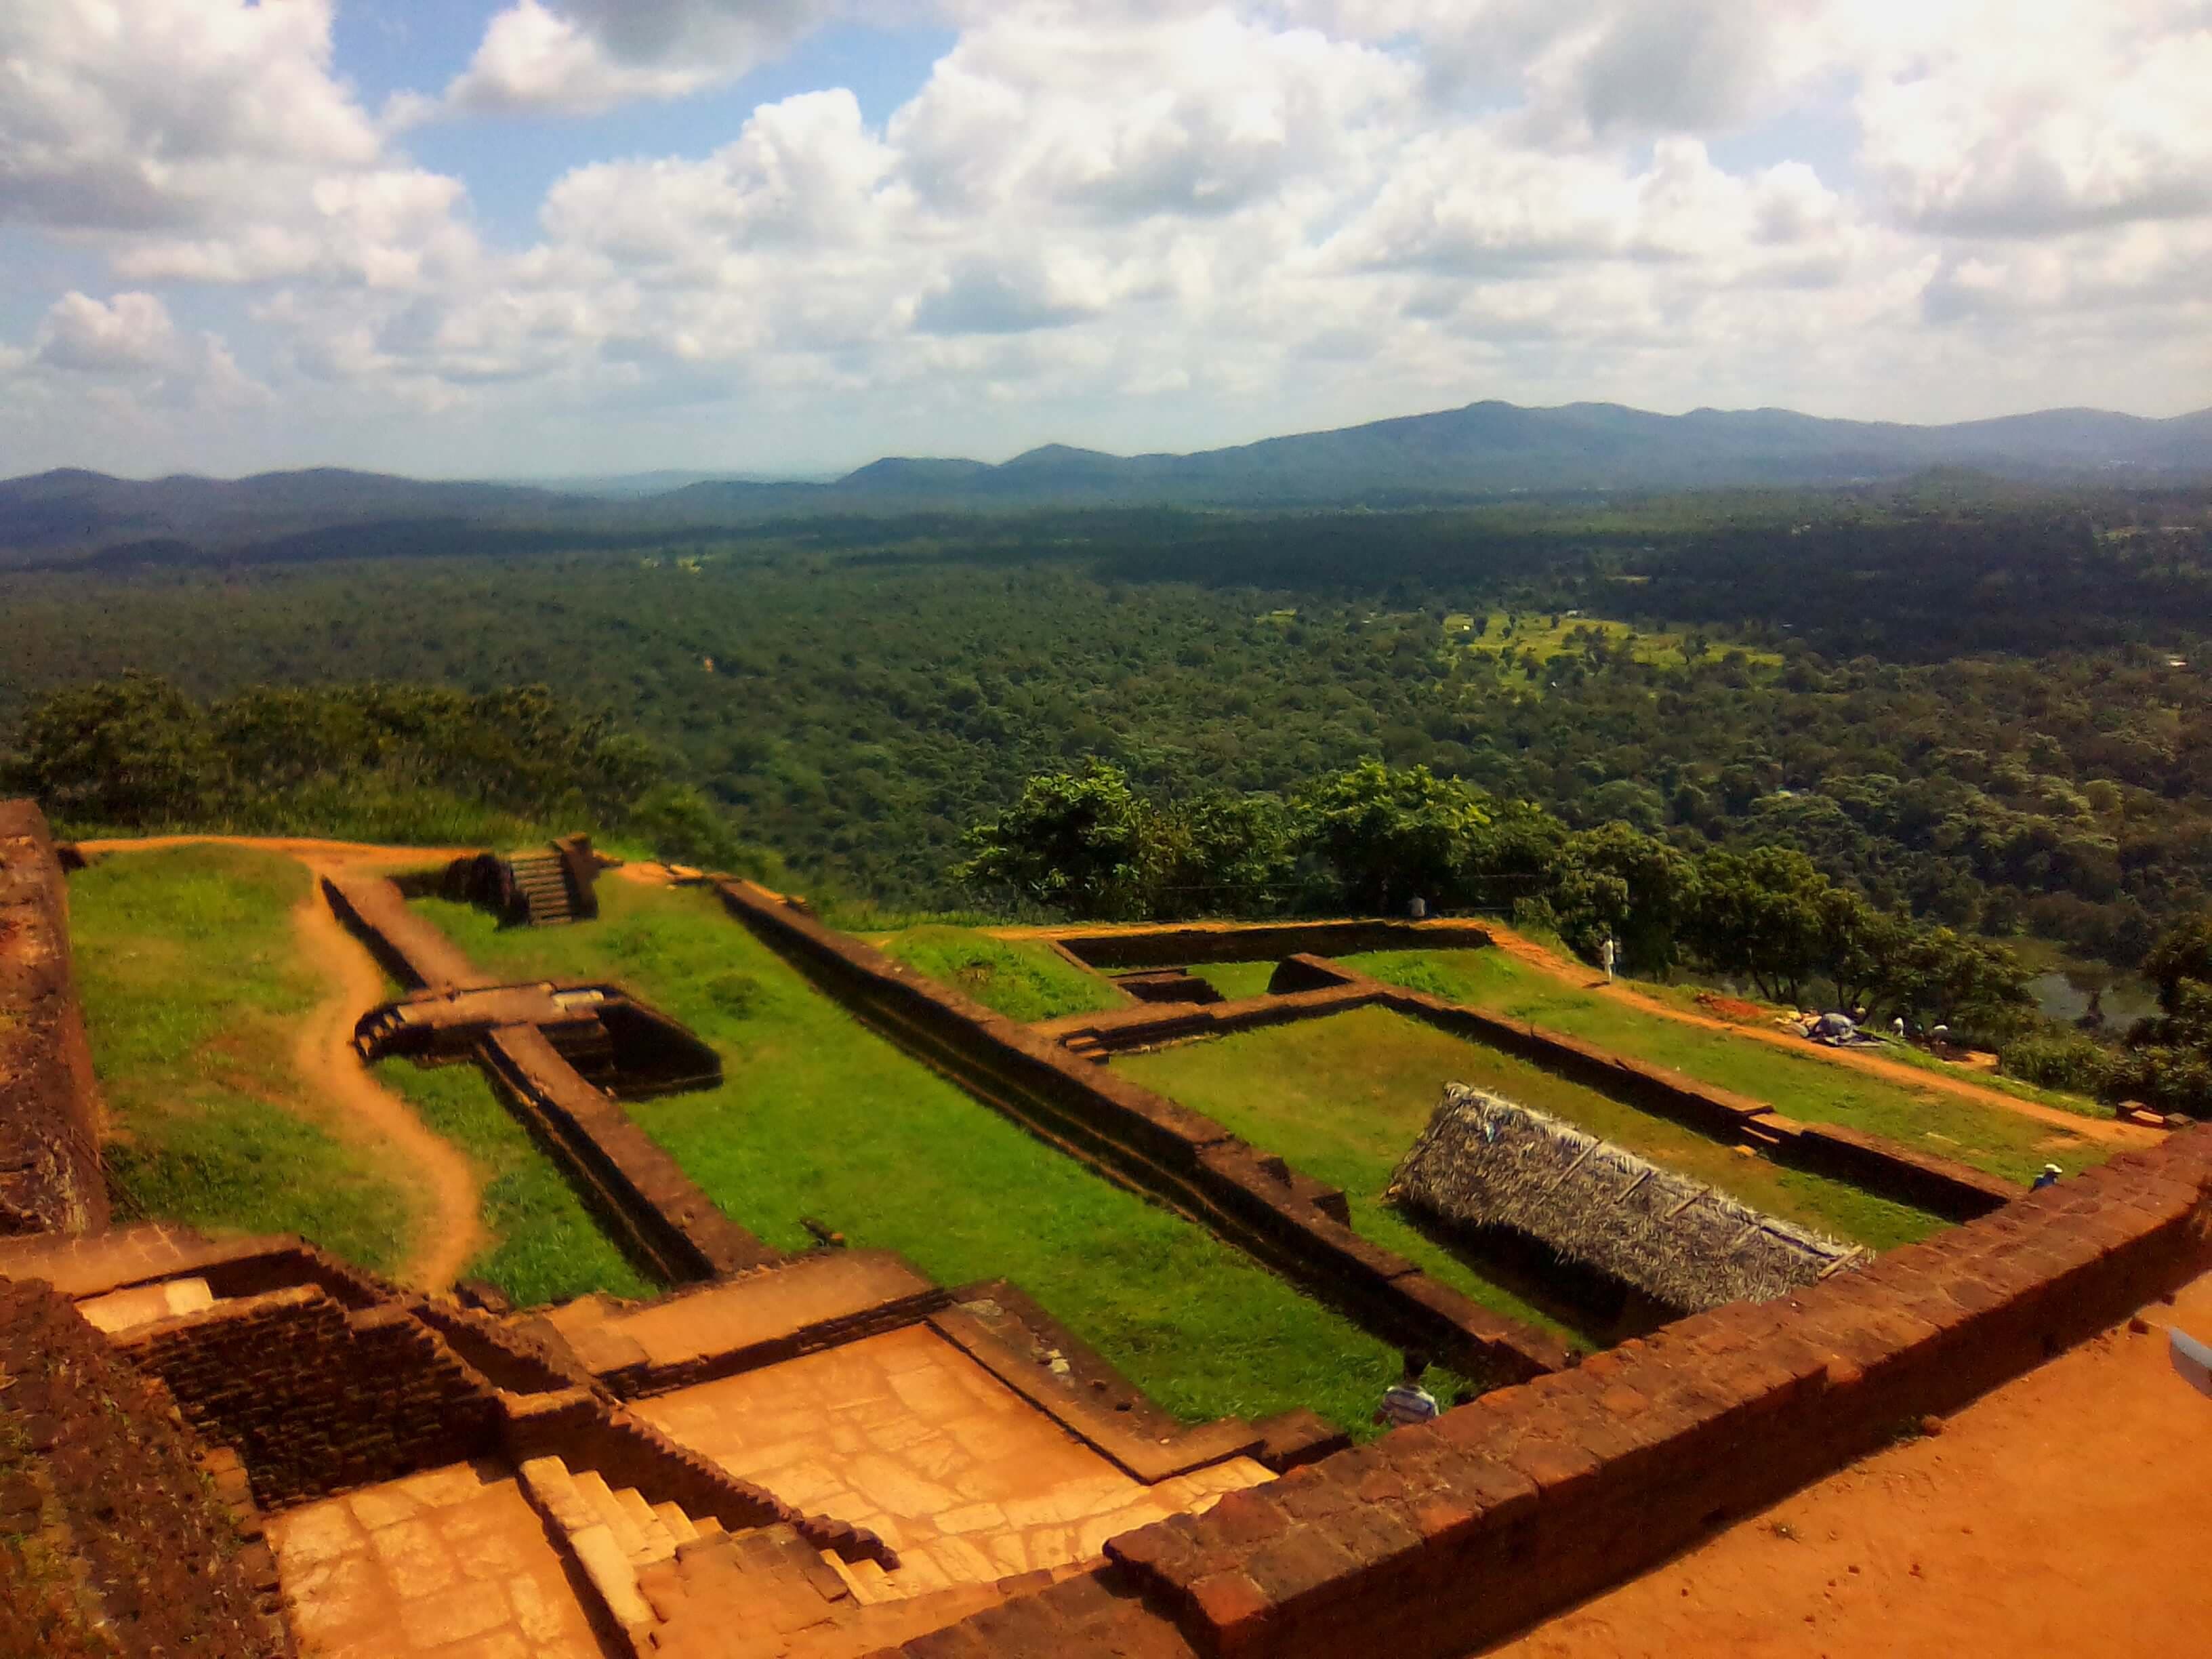 Top of the Sigiriya fortress, Sri Lanka.